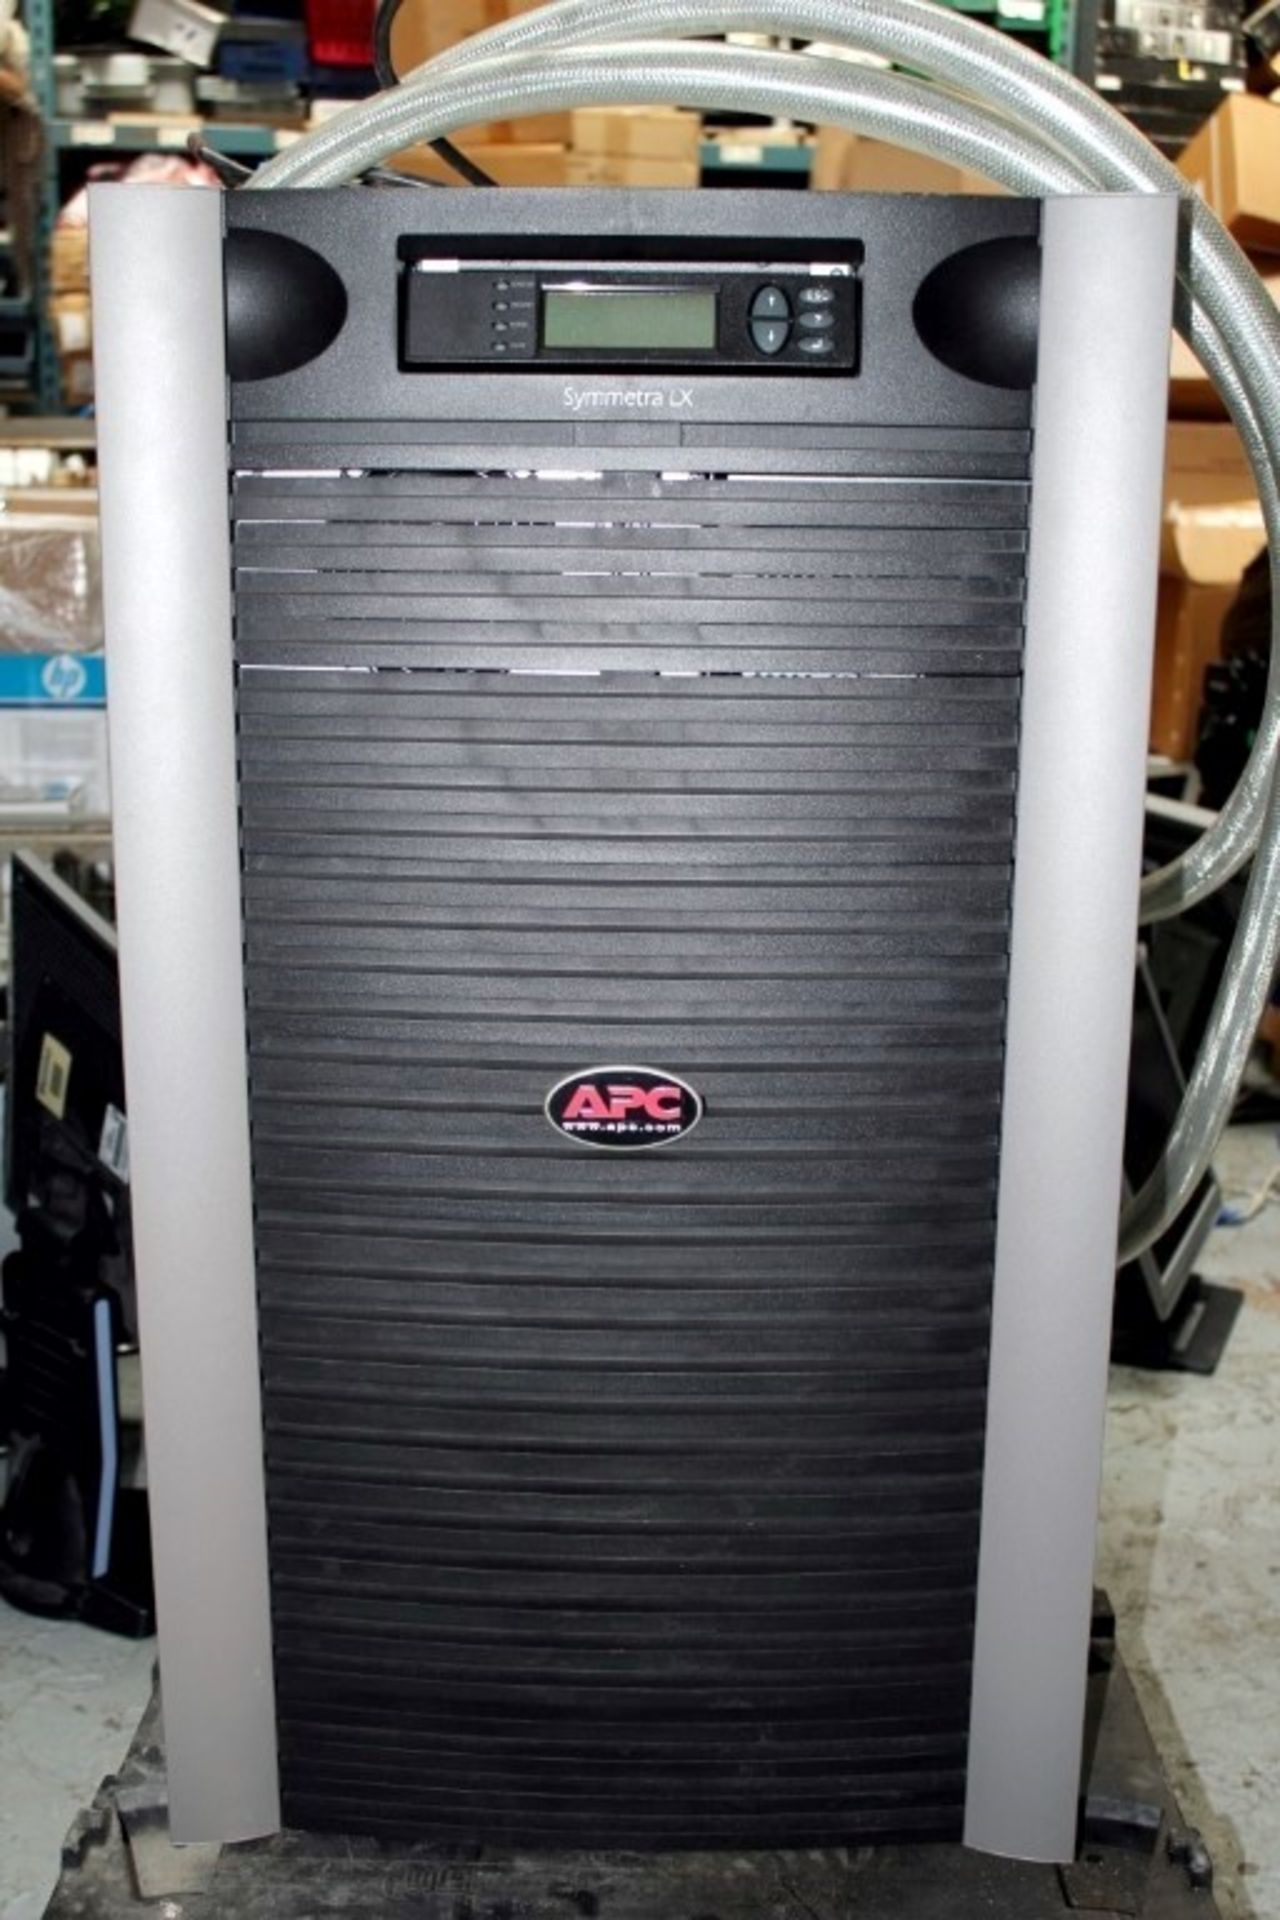 1 x APC Symmetra LX UPS (Uninterruptible Power Supply) - 16kVA Scalable to 16kVA N+1 Tower - - Image 7 of 13